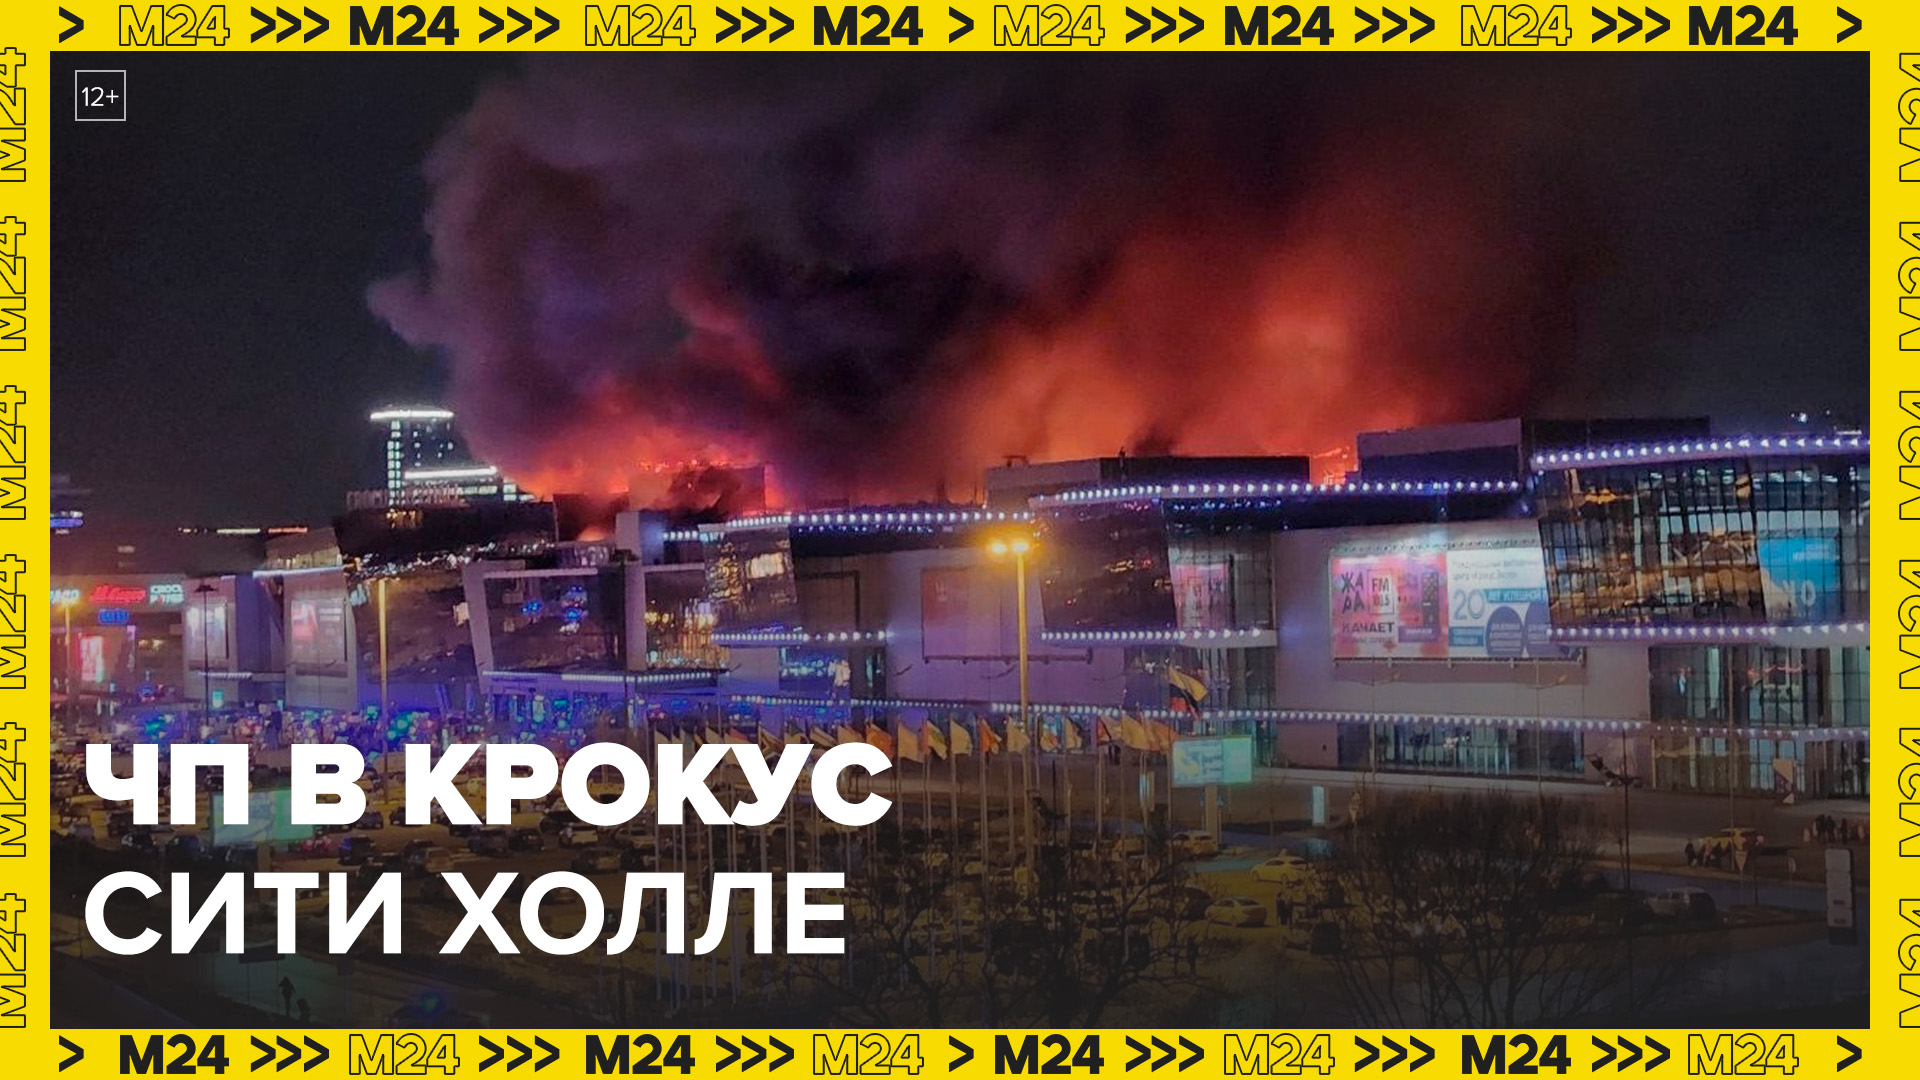 Видео очевидца пожара в "Крокус сити холле" - Москва 24